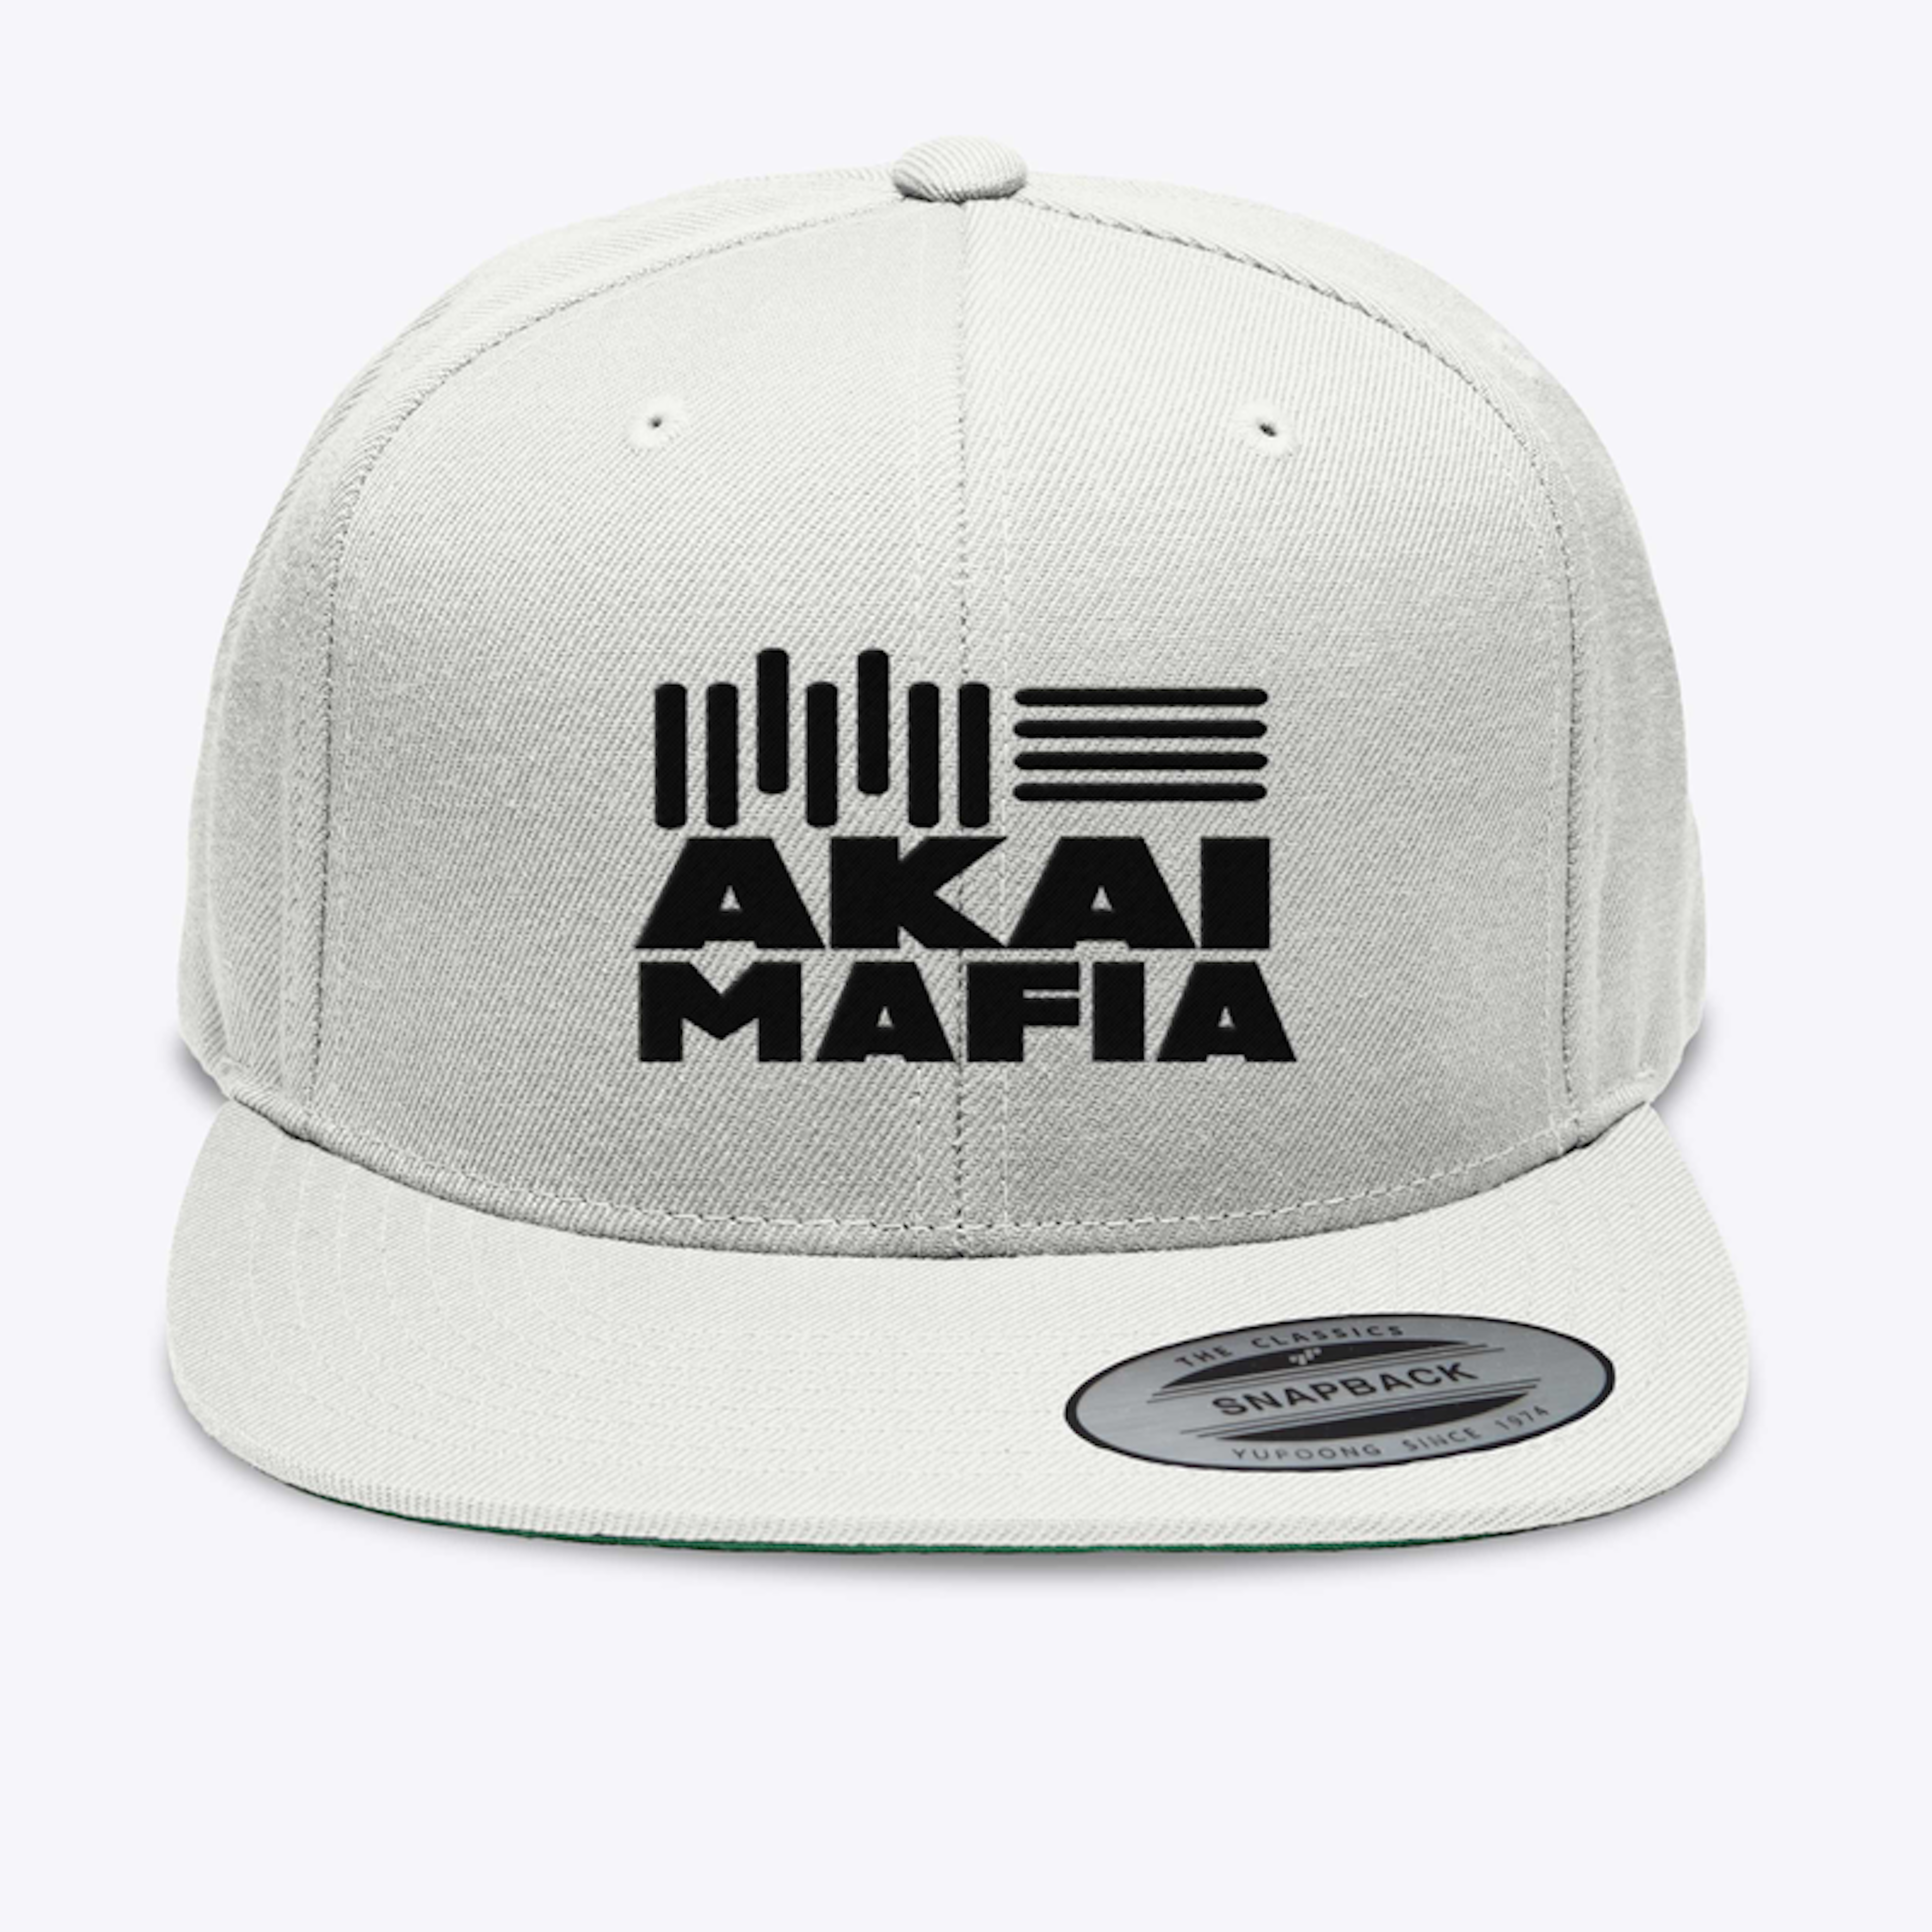 AKAI MAFIA Hats